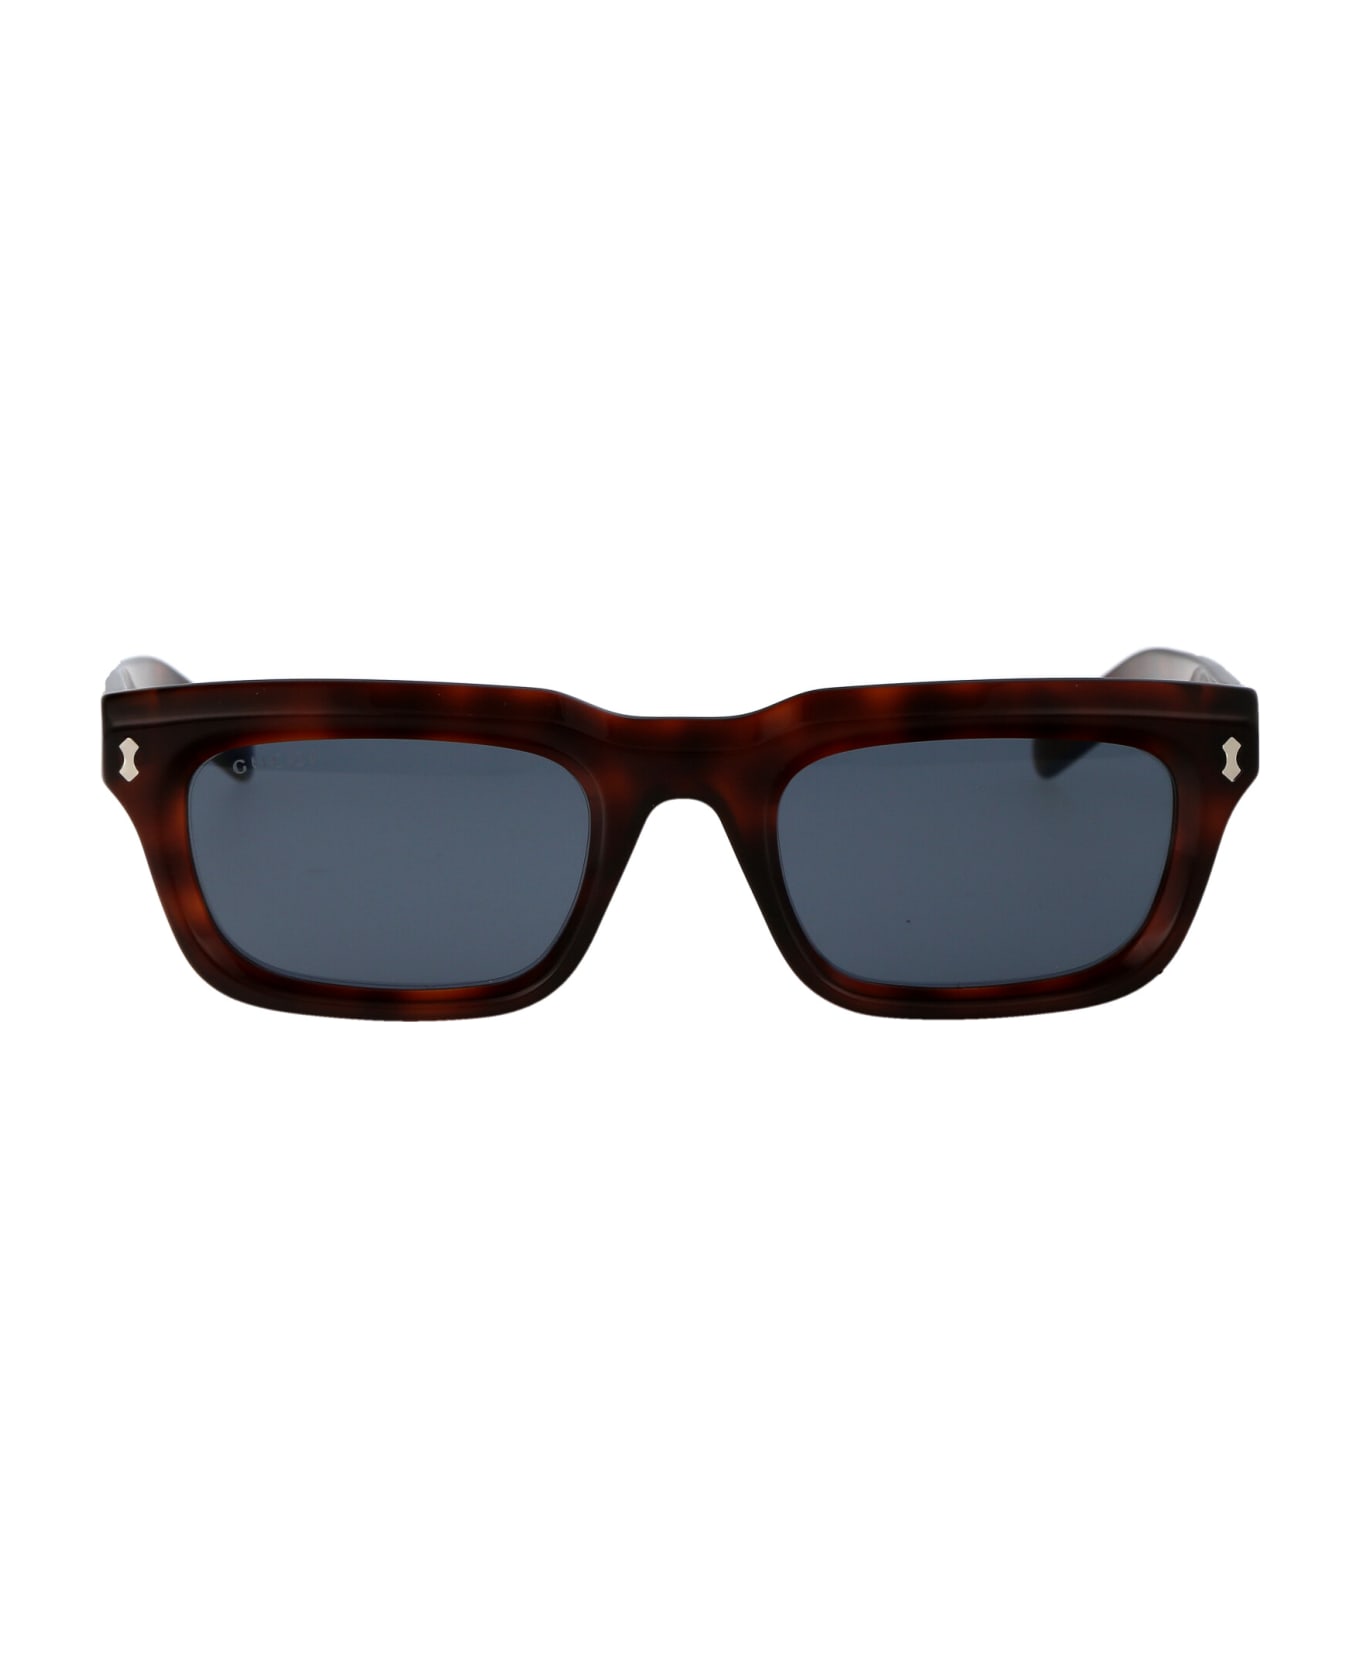 Gucci Eyewear Gg1524s Sunglasses - 002 HAVANA HAVANA BLUE